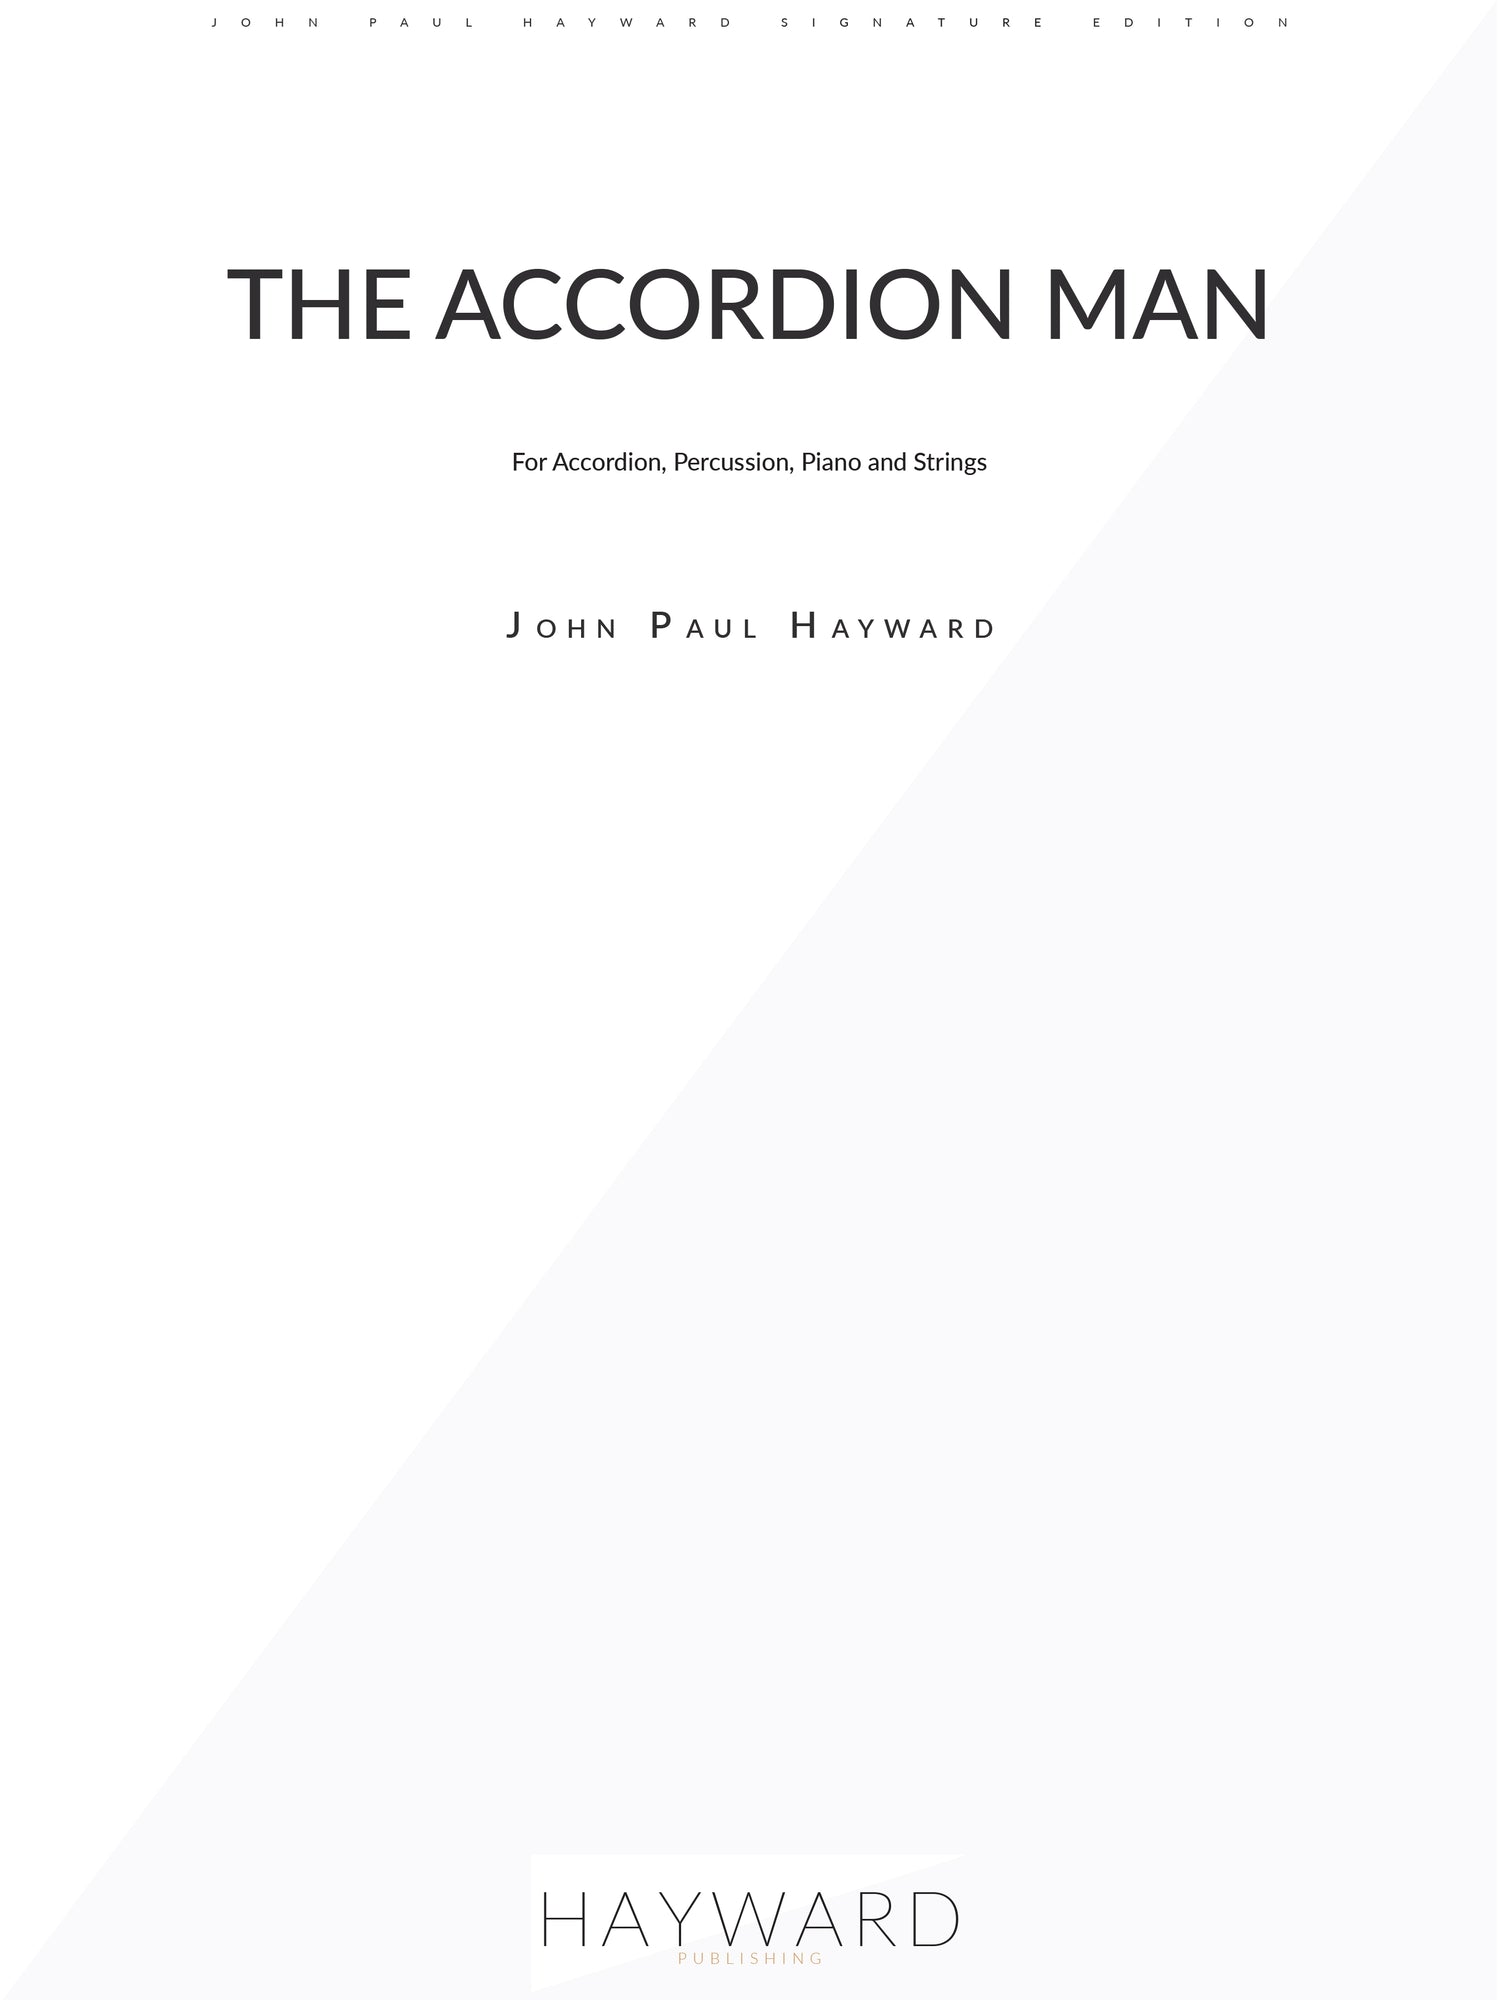 The Accordion Man